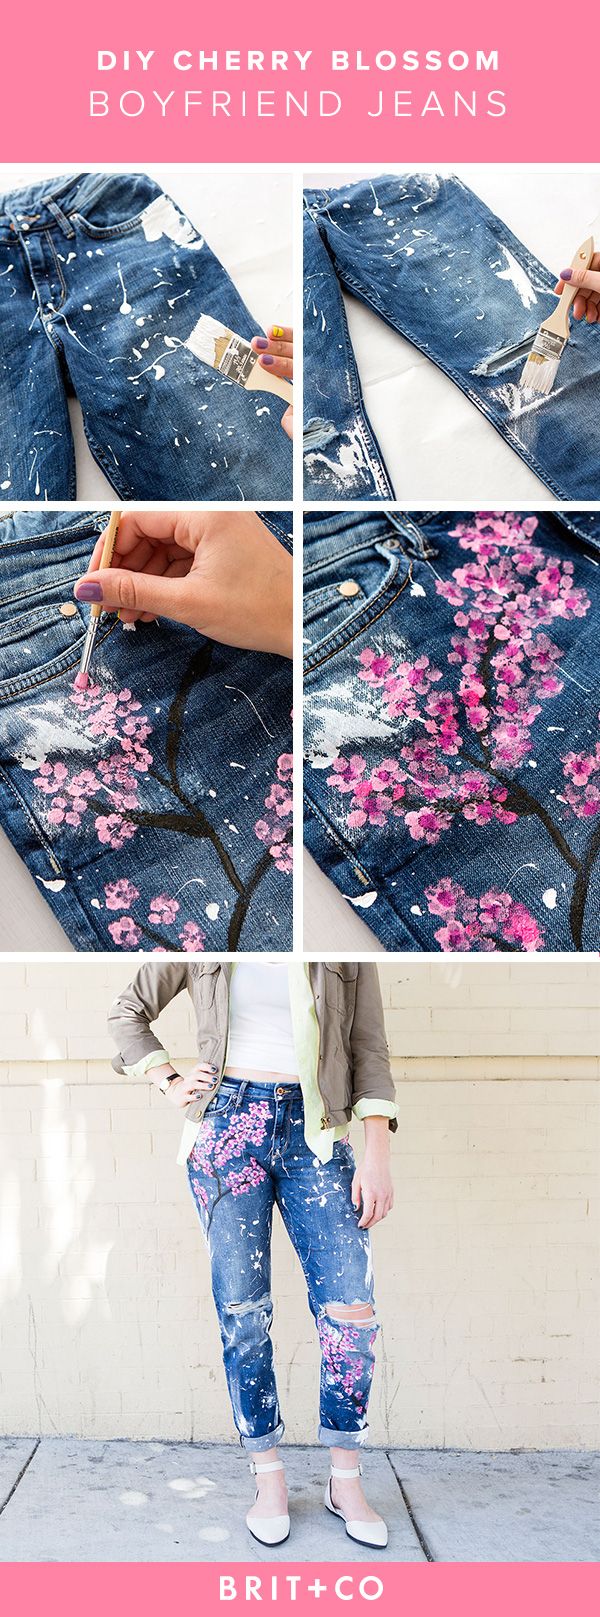 How to DIY Blake Lively’s $500 Cherry Blossom Boyfriend Jeans